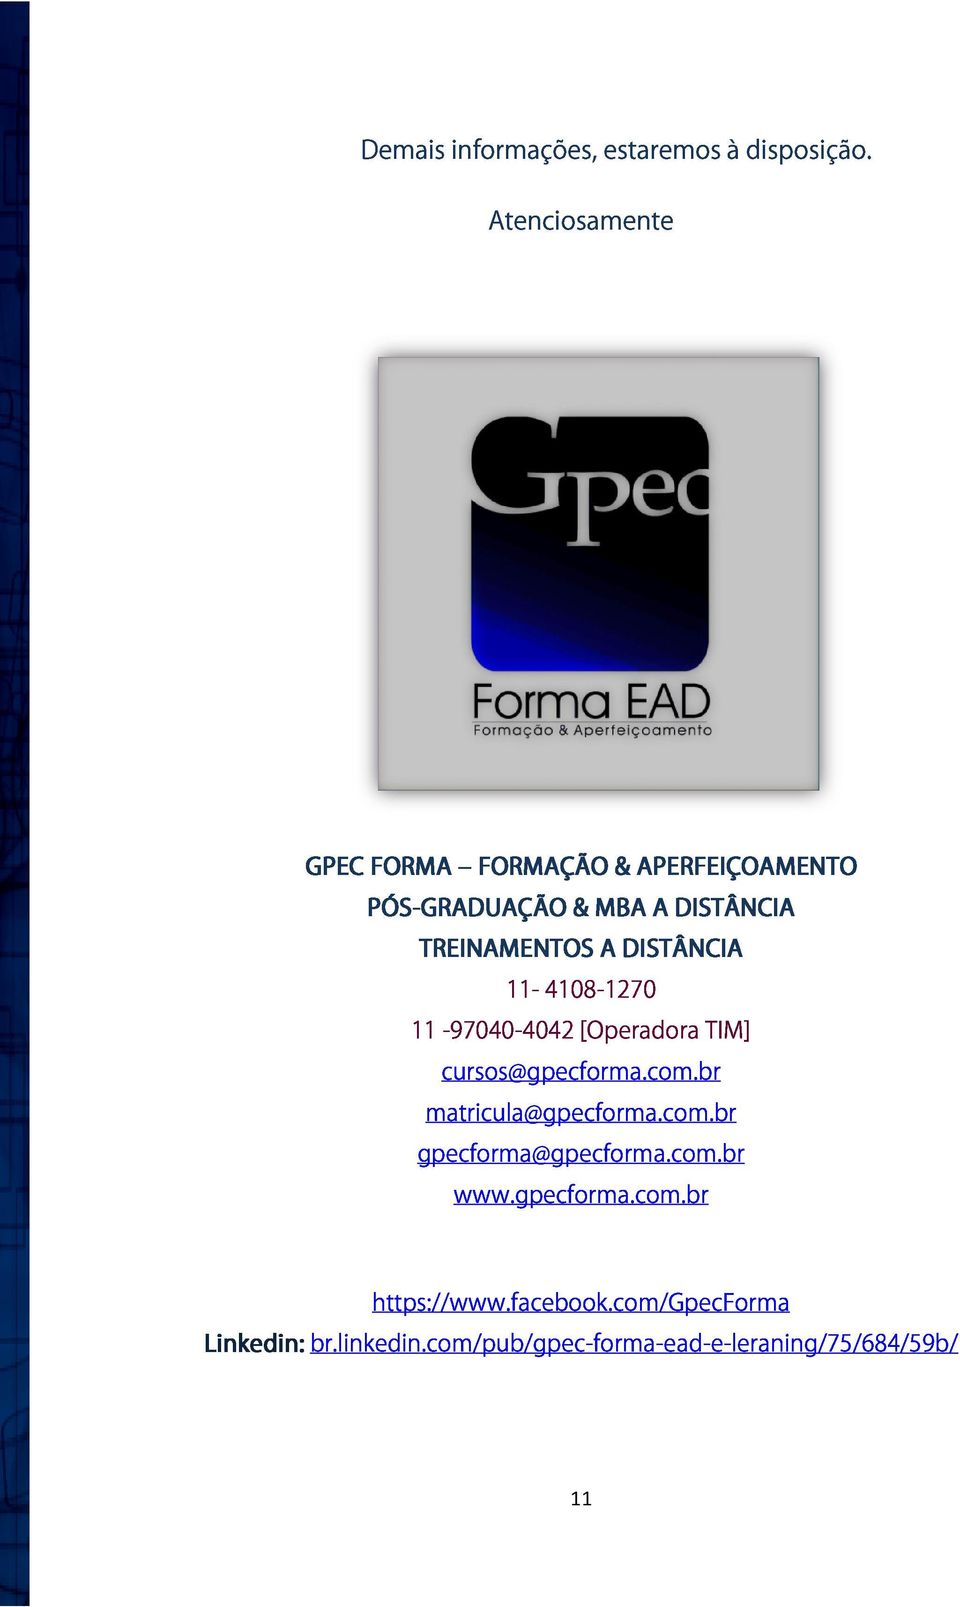 11-97040-4042 11-4108-1270 [Operadora TIM] gpecforma@gpecforma.com.br matricula@gpecforma.com.br cursos@gpecforma.